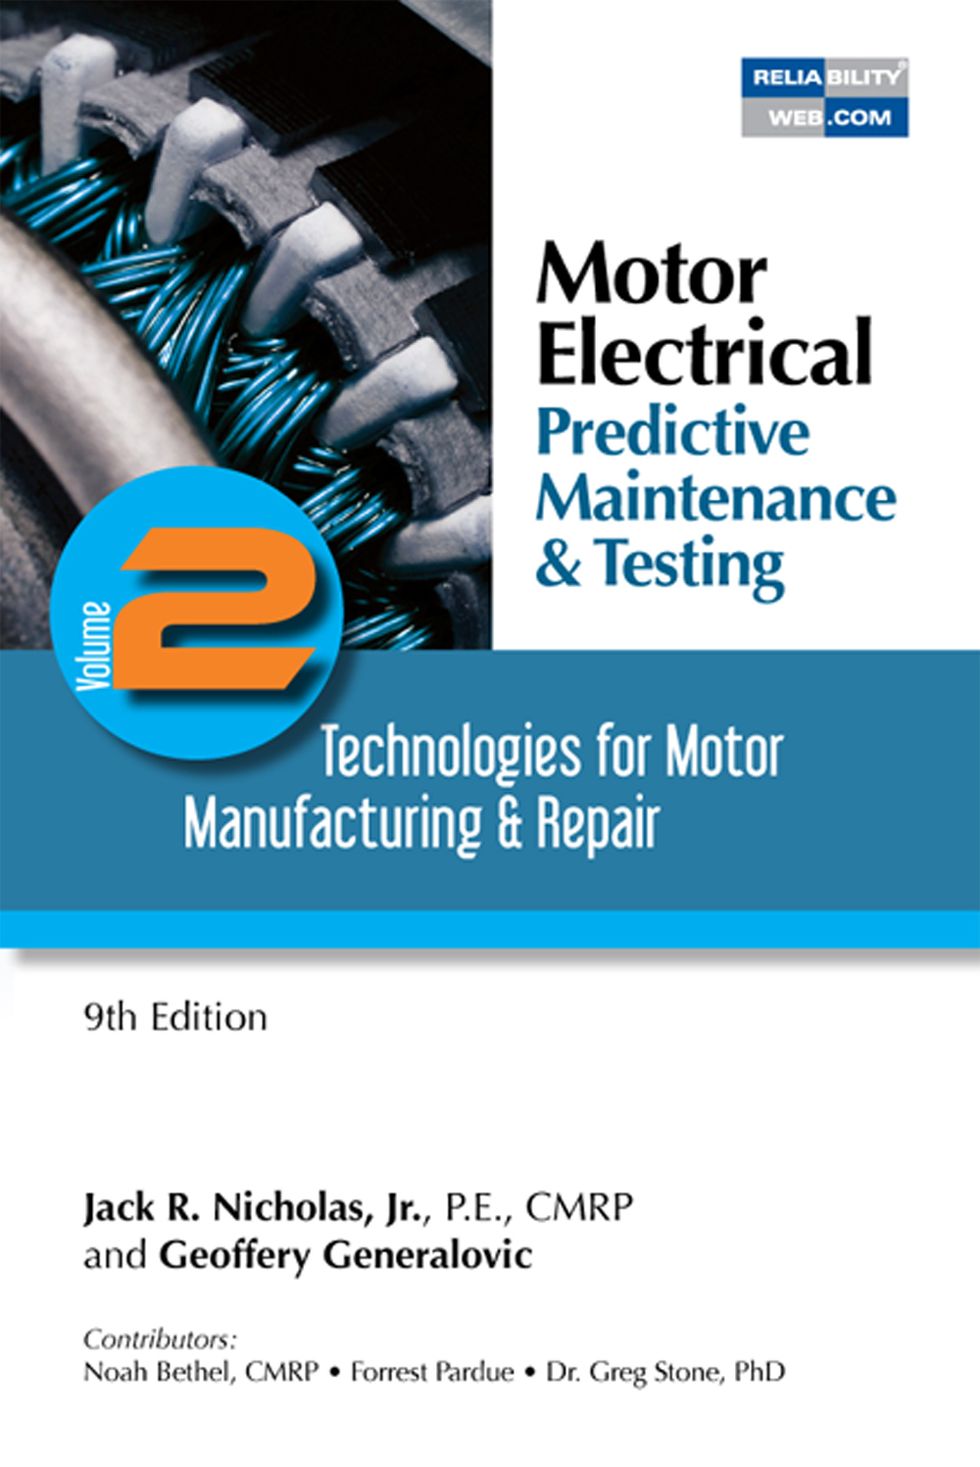  Motor Electrical Predictive Maintenance & Testing Vol. 2 